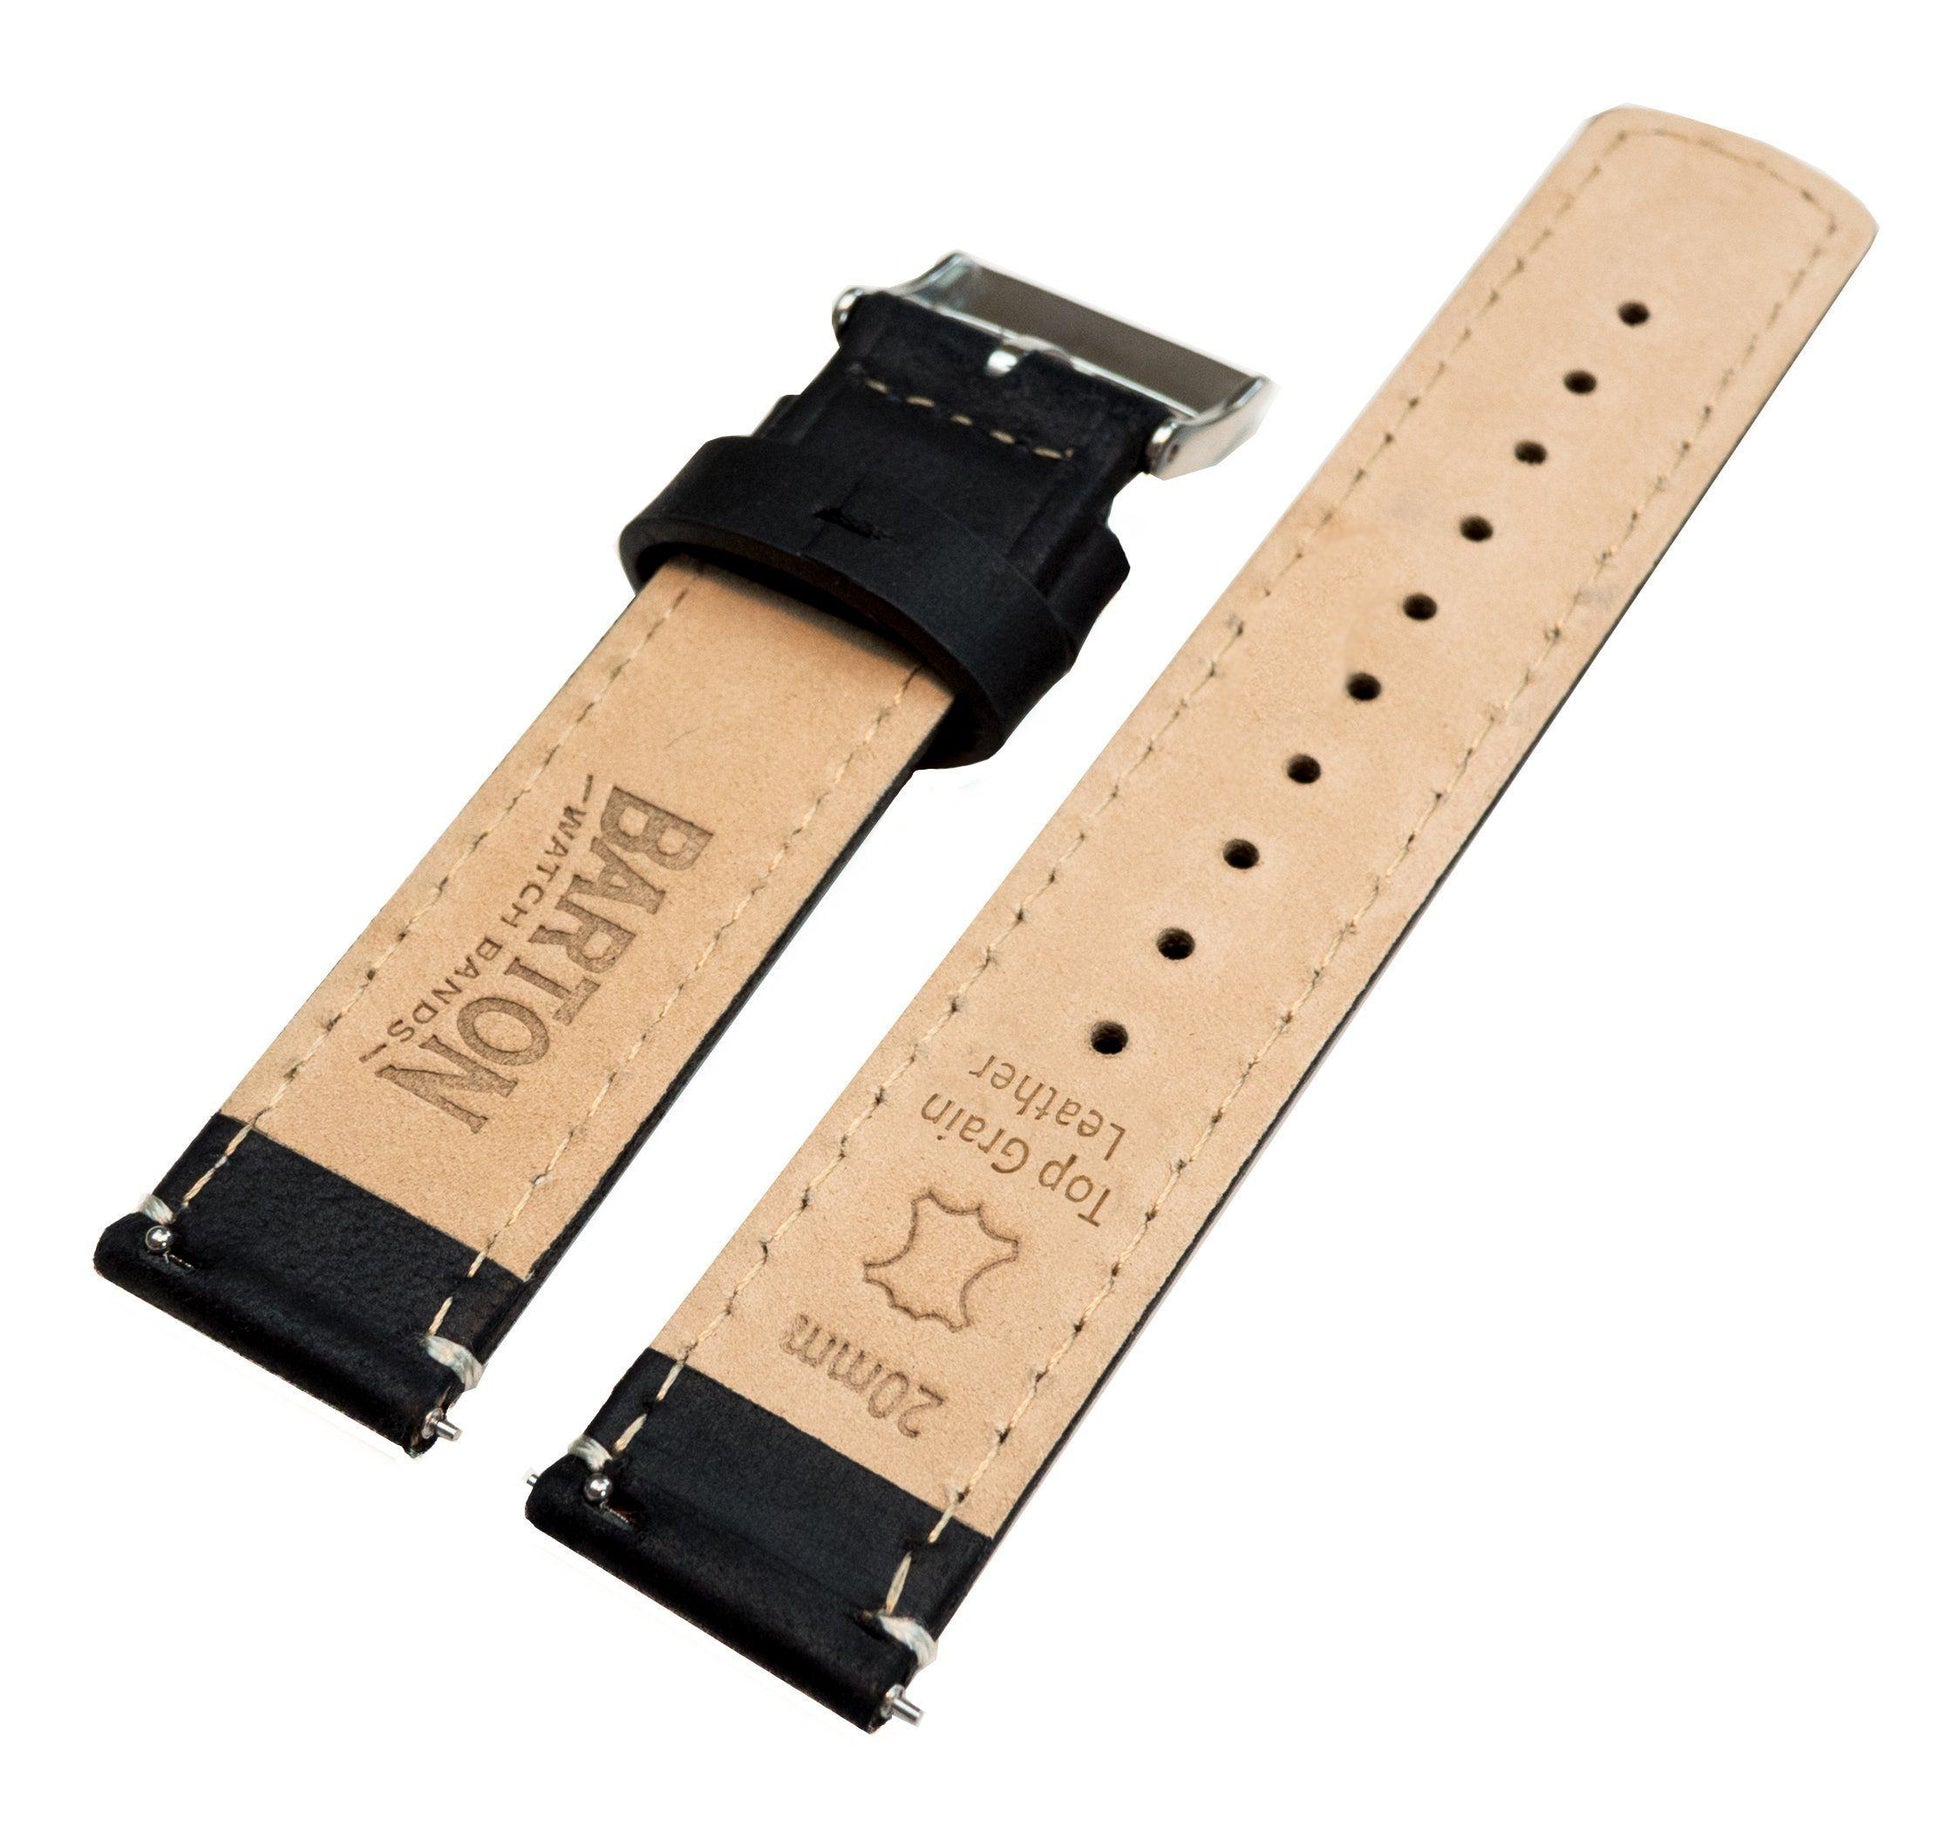 Samsung Galaxy Watch | Black Leather & Linen White Stitching - Barton Watch Bands